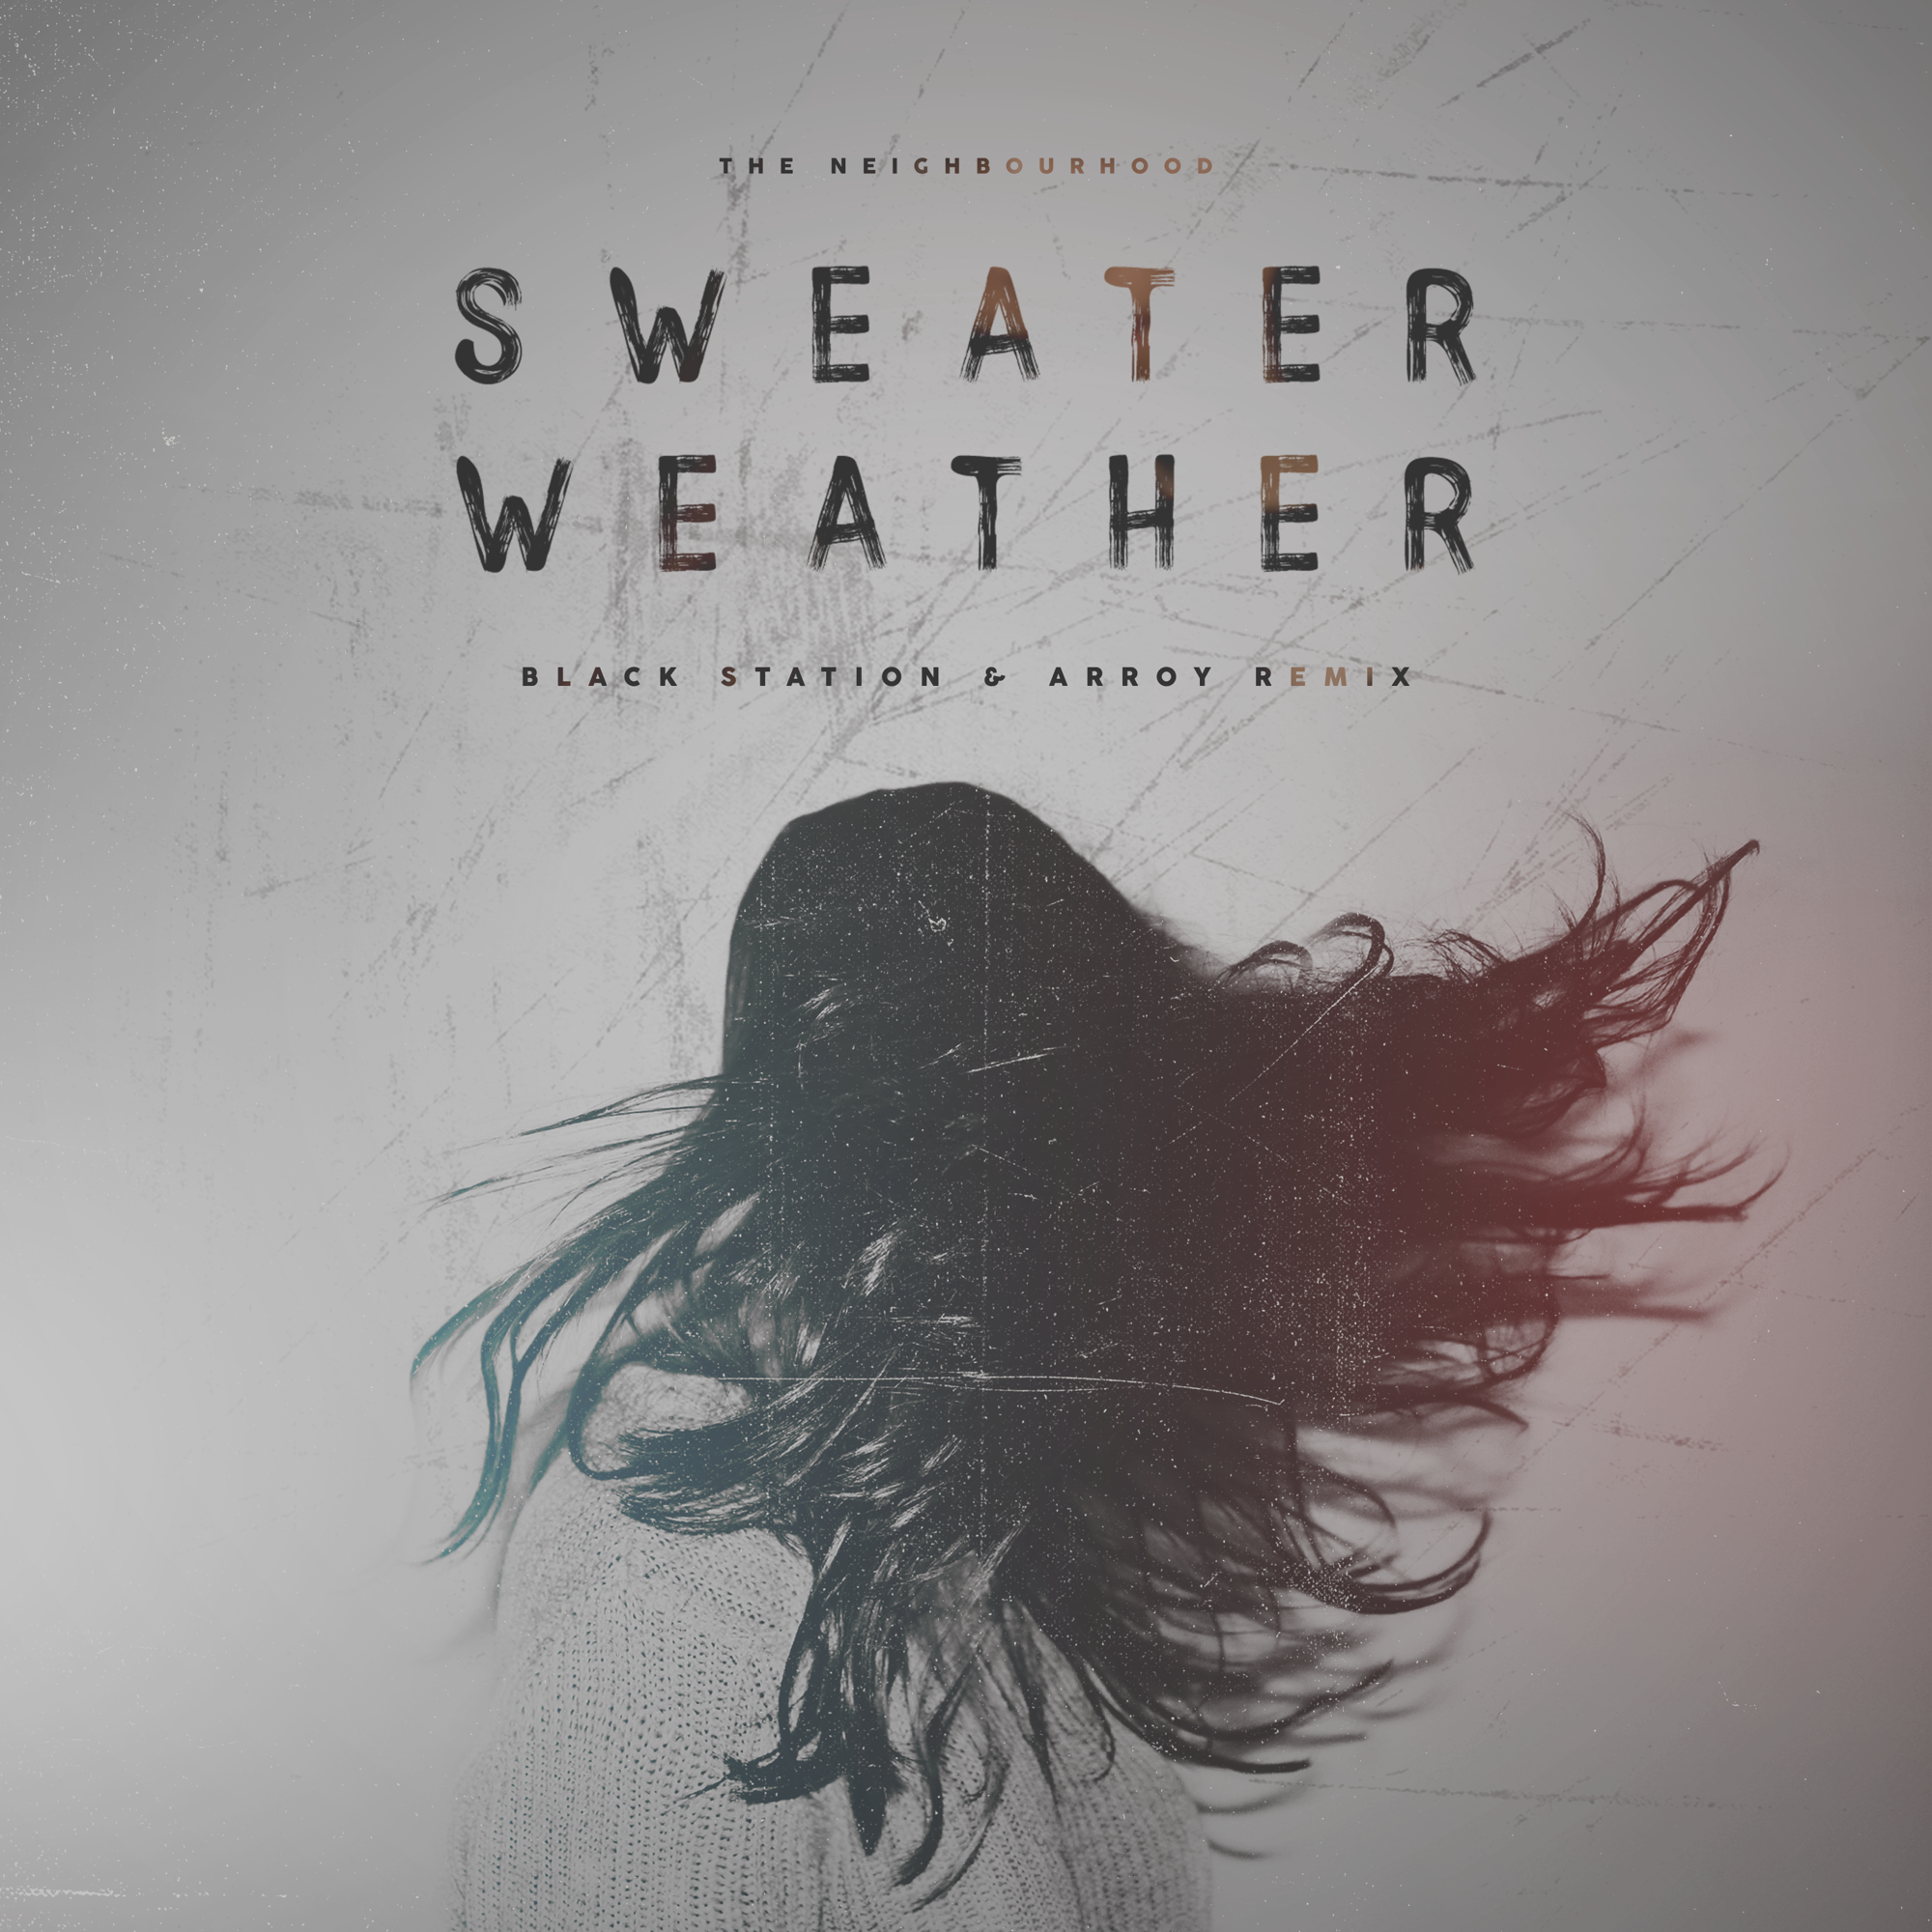 Sweater Weather” by The NeighbourhoodDilemma X